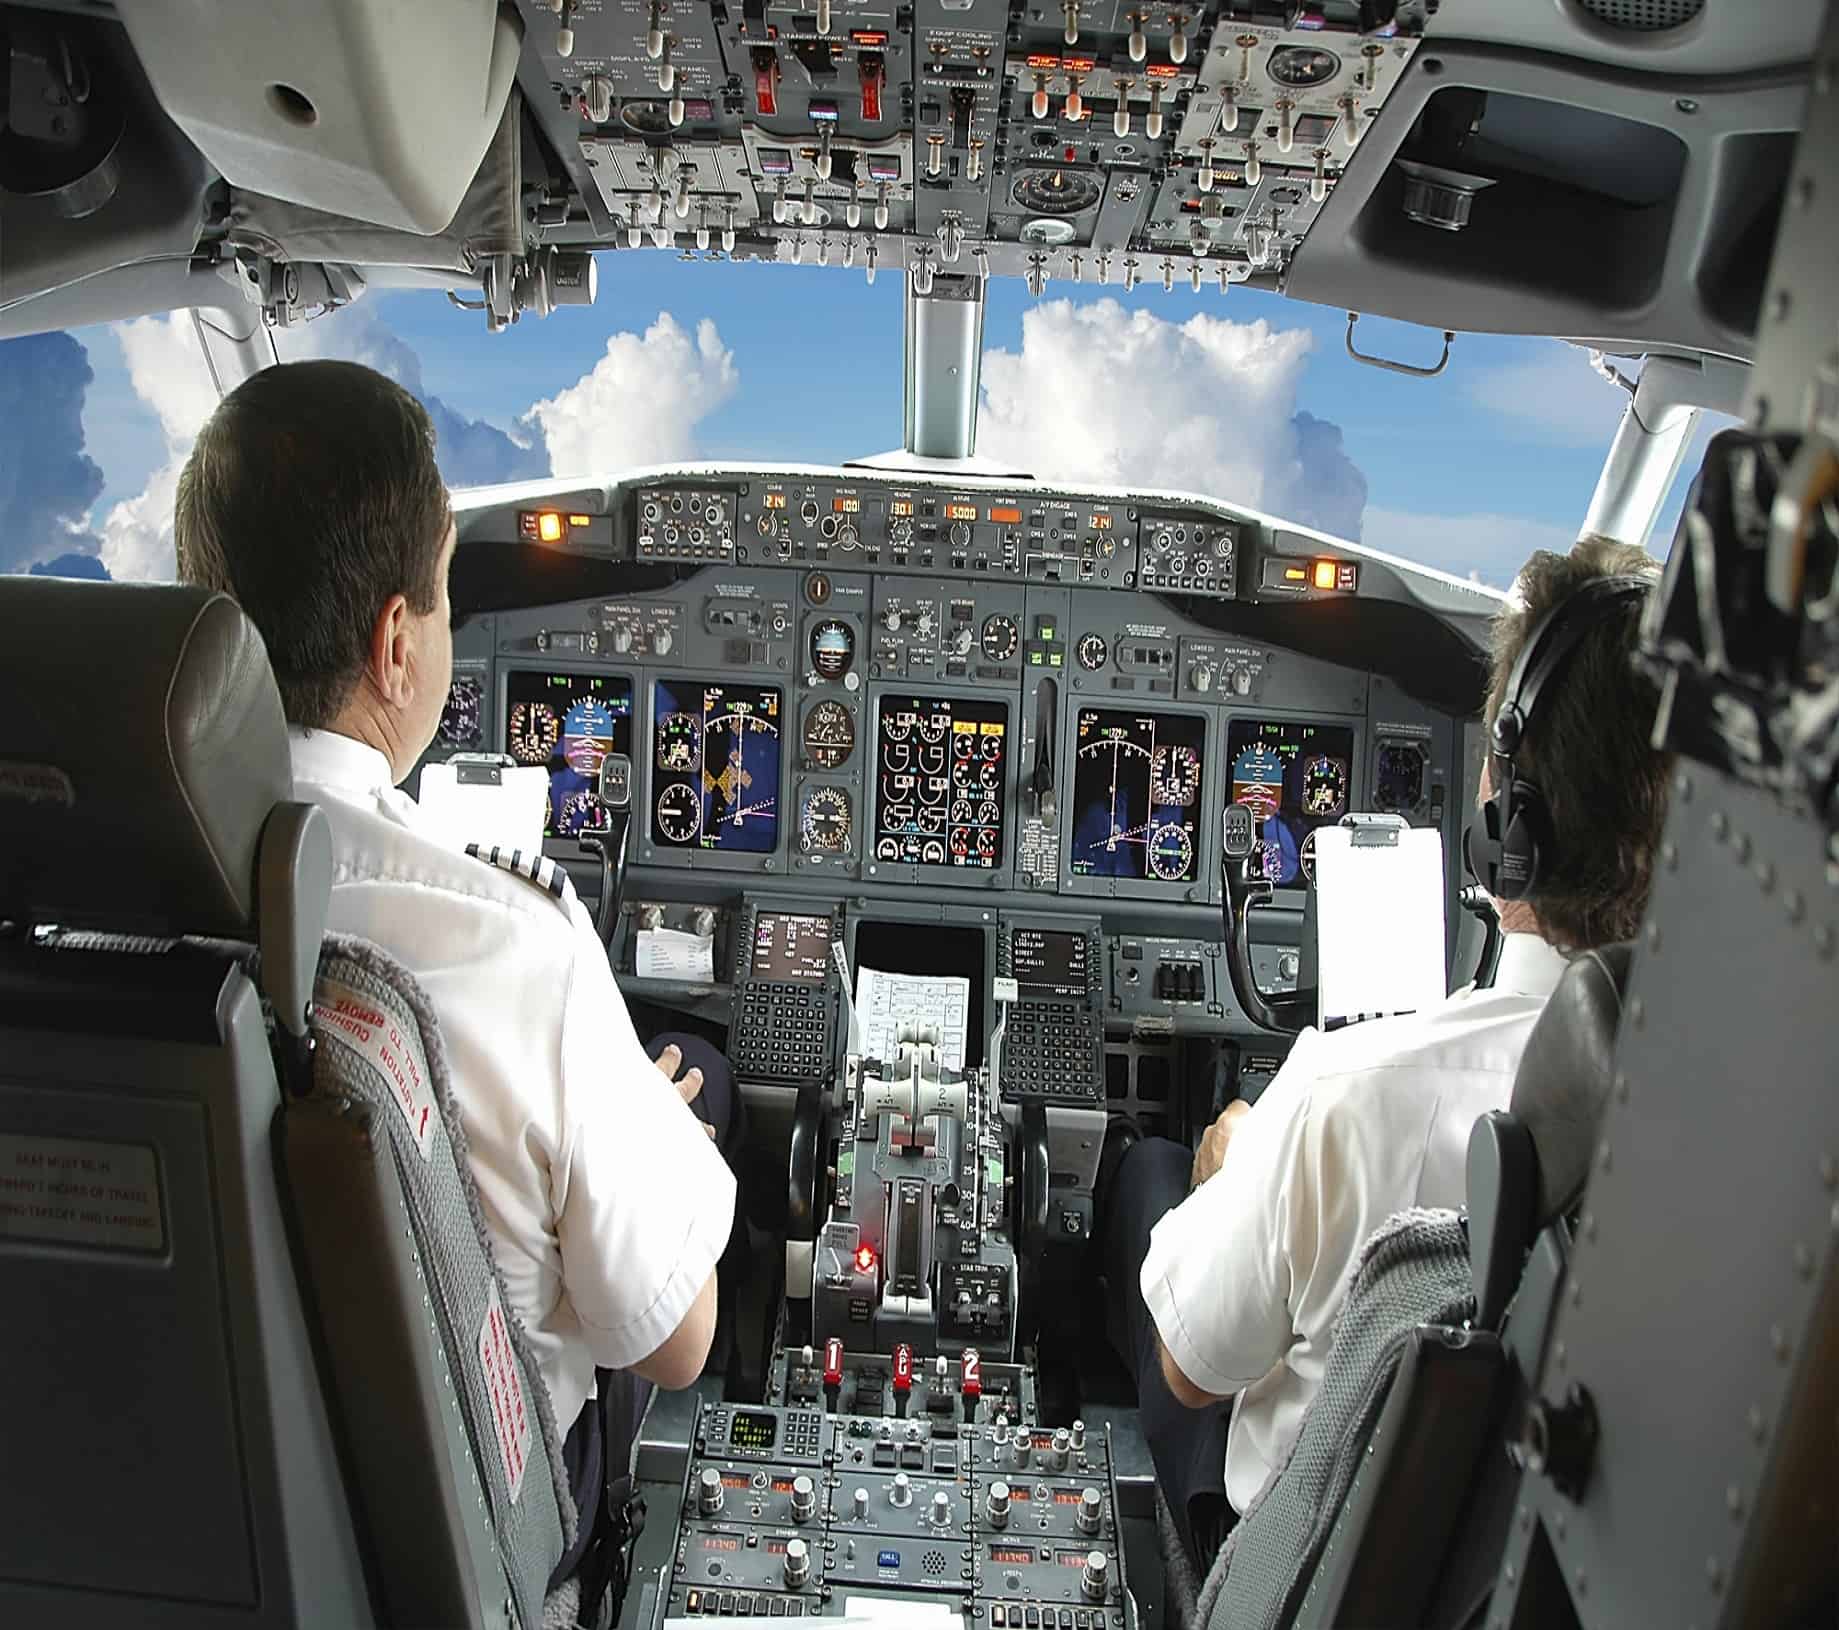 15-behind-the-scenes-secrets-of-airline-pilots-7200-77ughP3asVKbvvnqIpCDauMu2